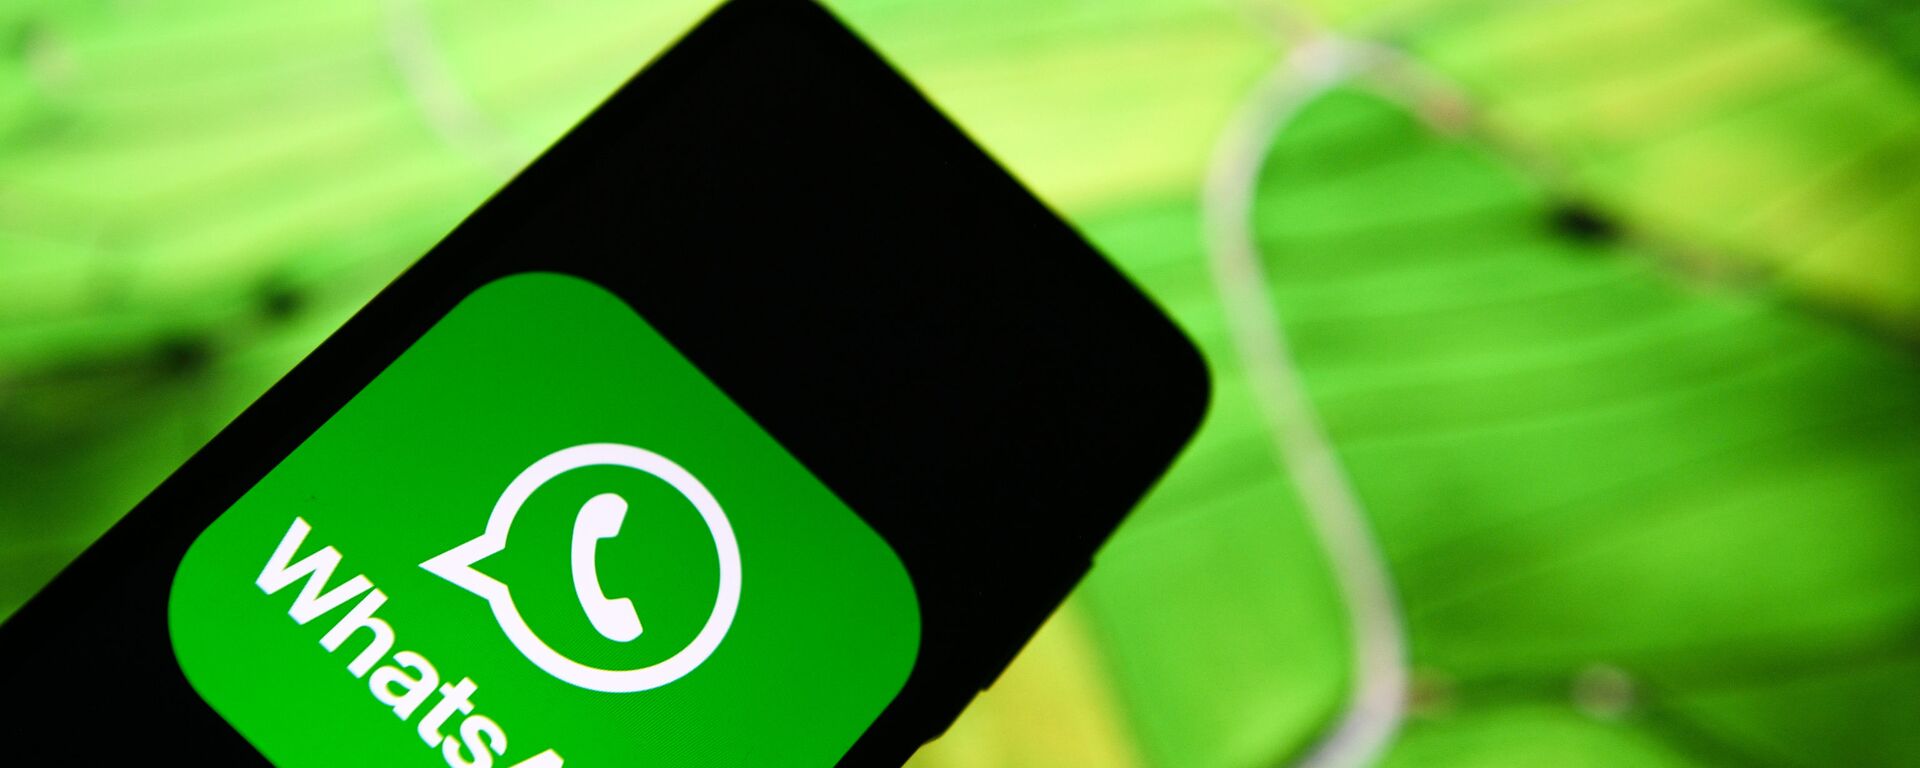 Приложение мессенджера WhatsApp на экране смартфона. - Sputnik Абхазия, 1920, 04.08.2021